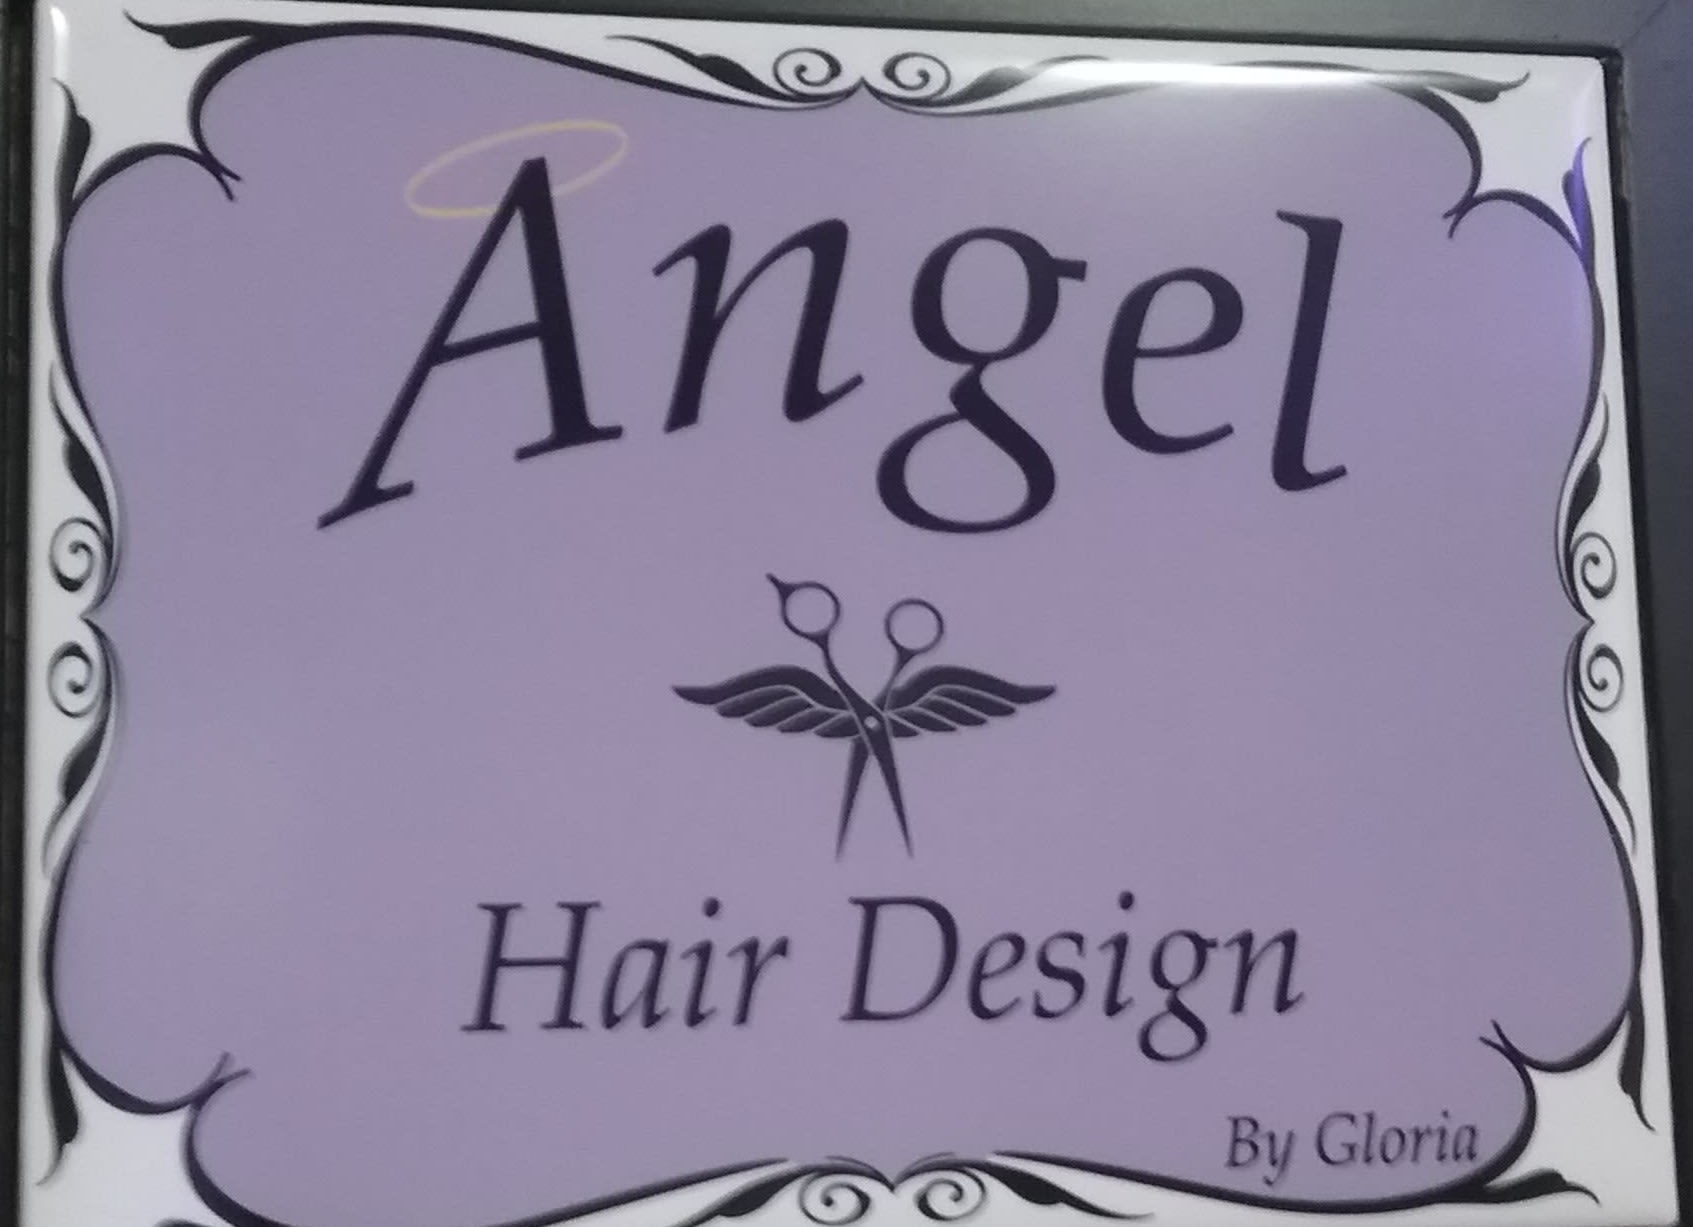 Angel Hair Design By Gloria